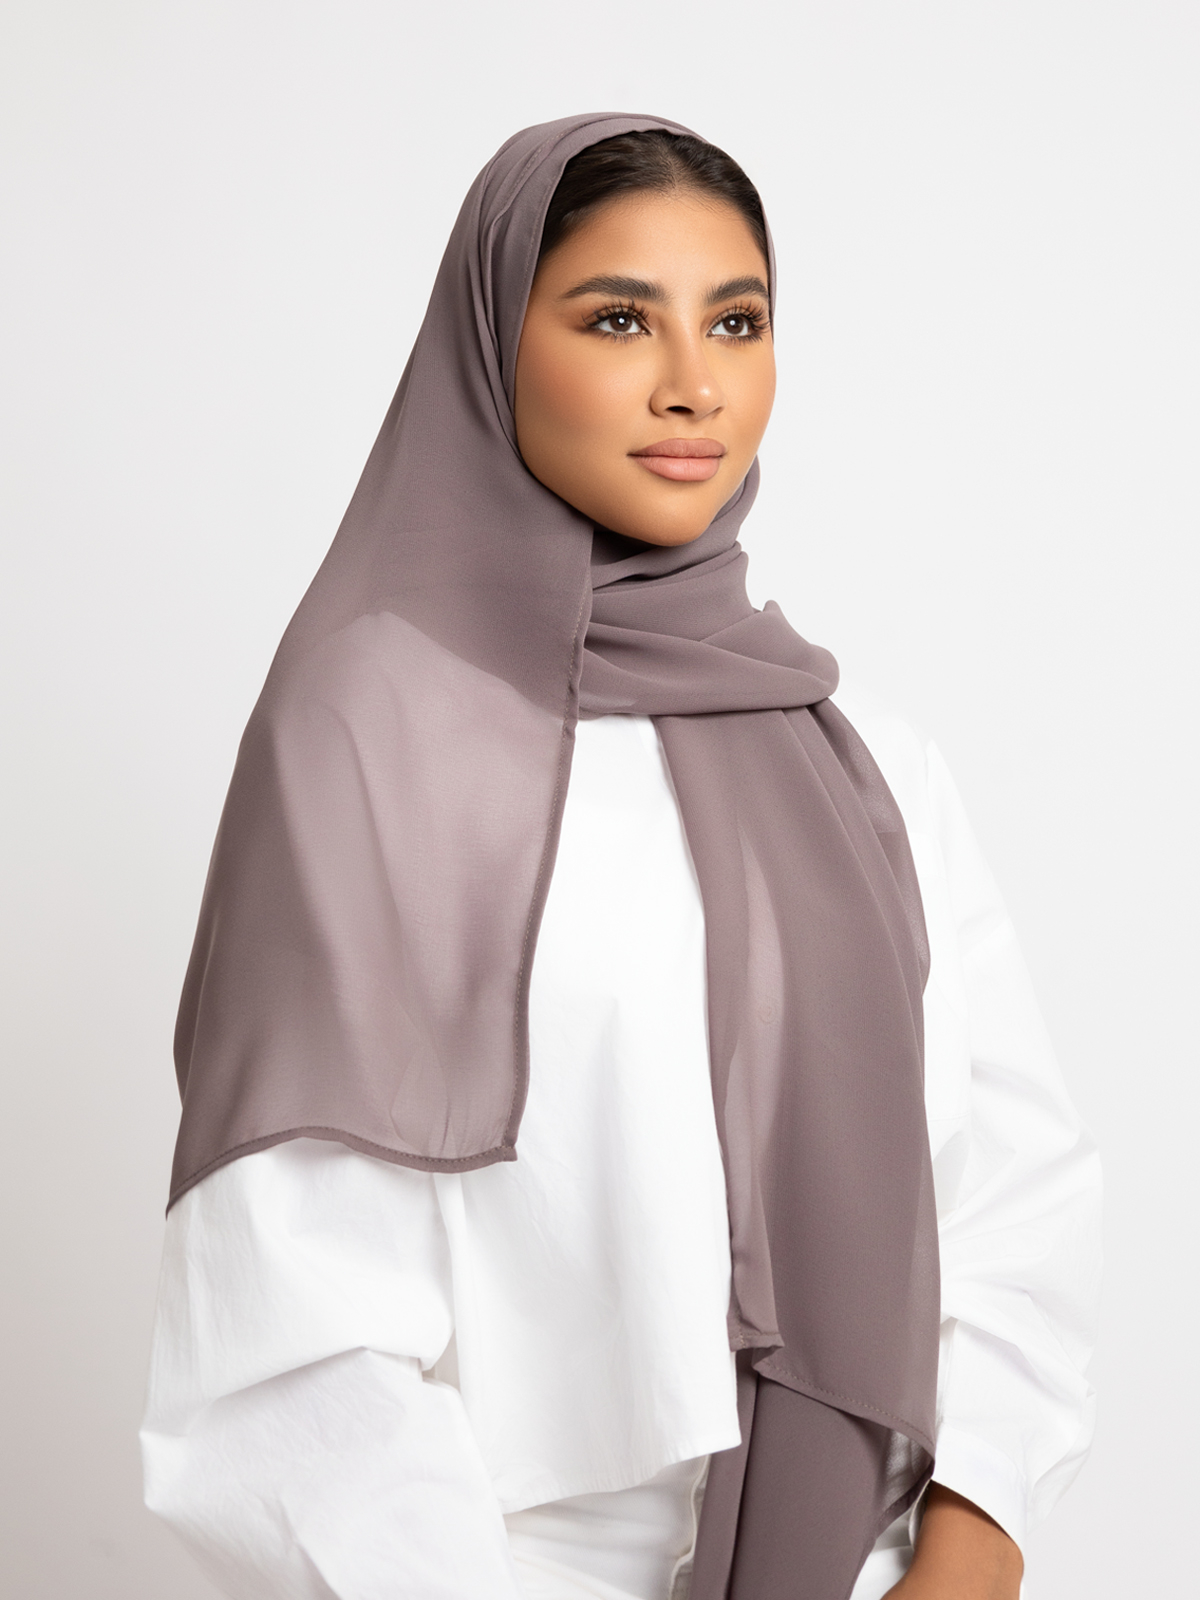 Luxurious chiffon hijab plain tarha 200 cm long purple color high quality material online in ksa by kaafmeem